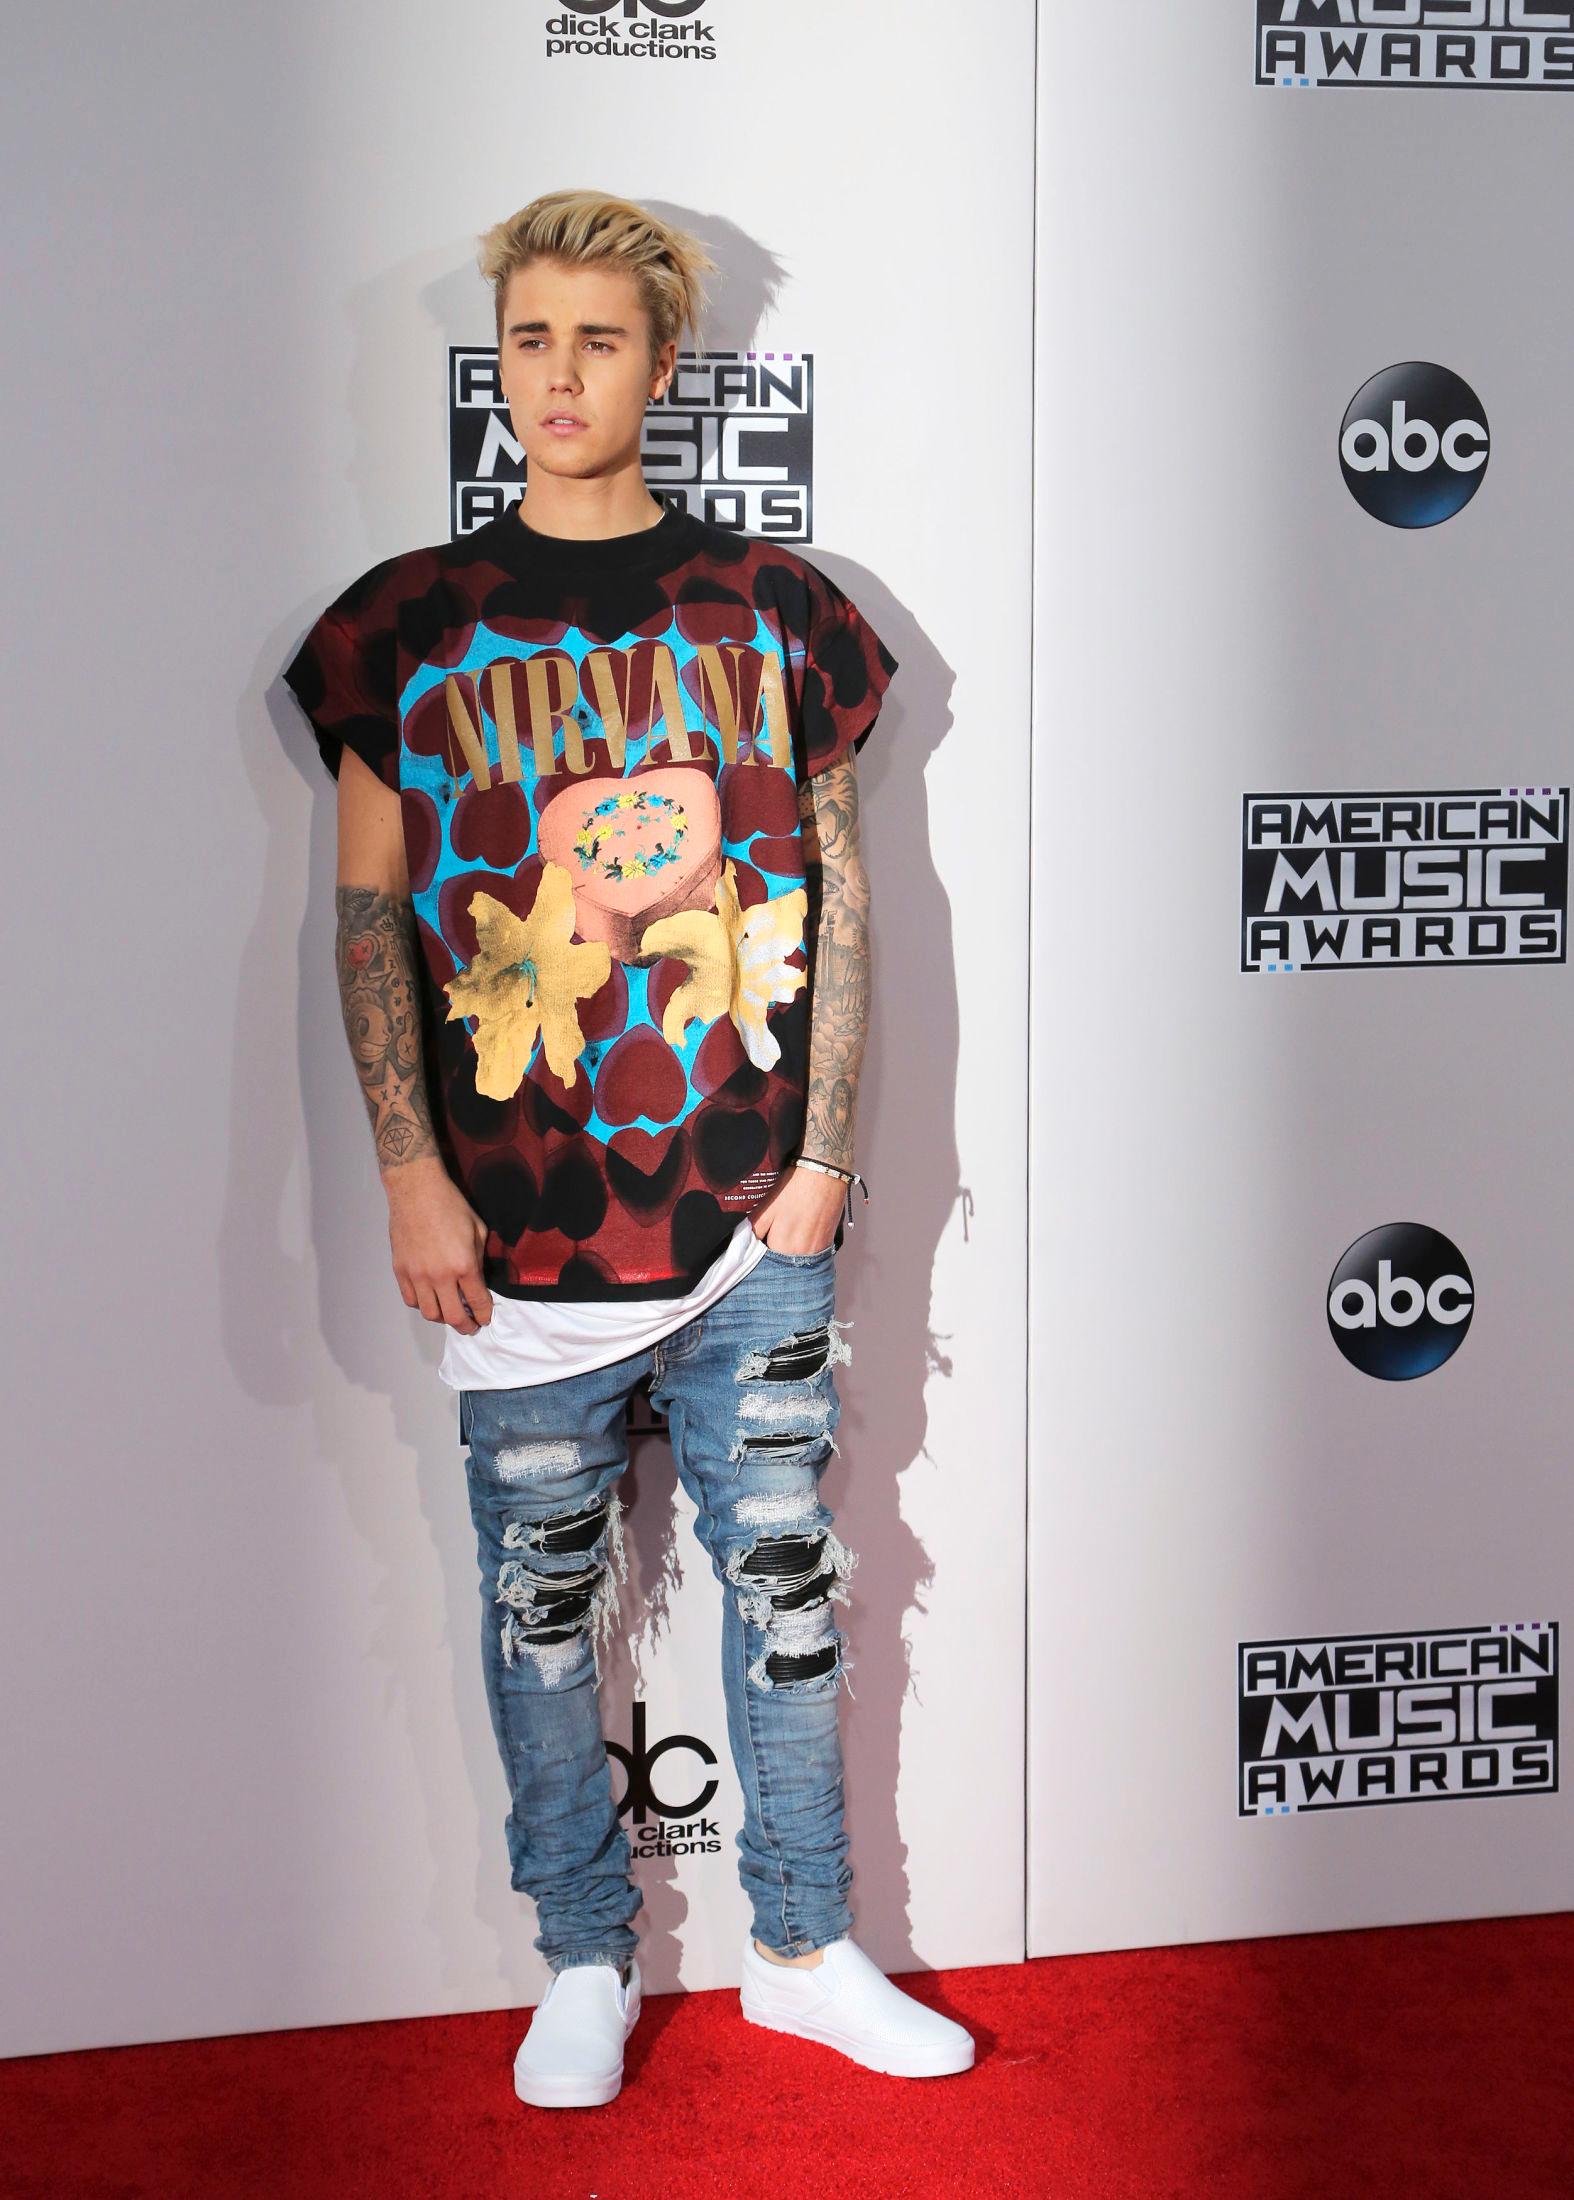 ROCKA: I 2015 ble Bieber enda mer rocka i stilen med hullete jeans og band-T-skjorter.